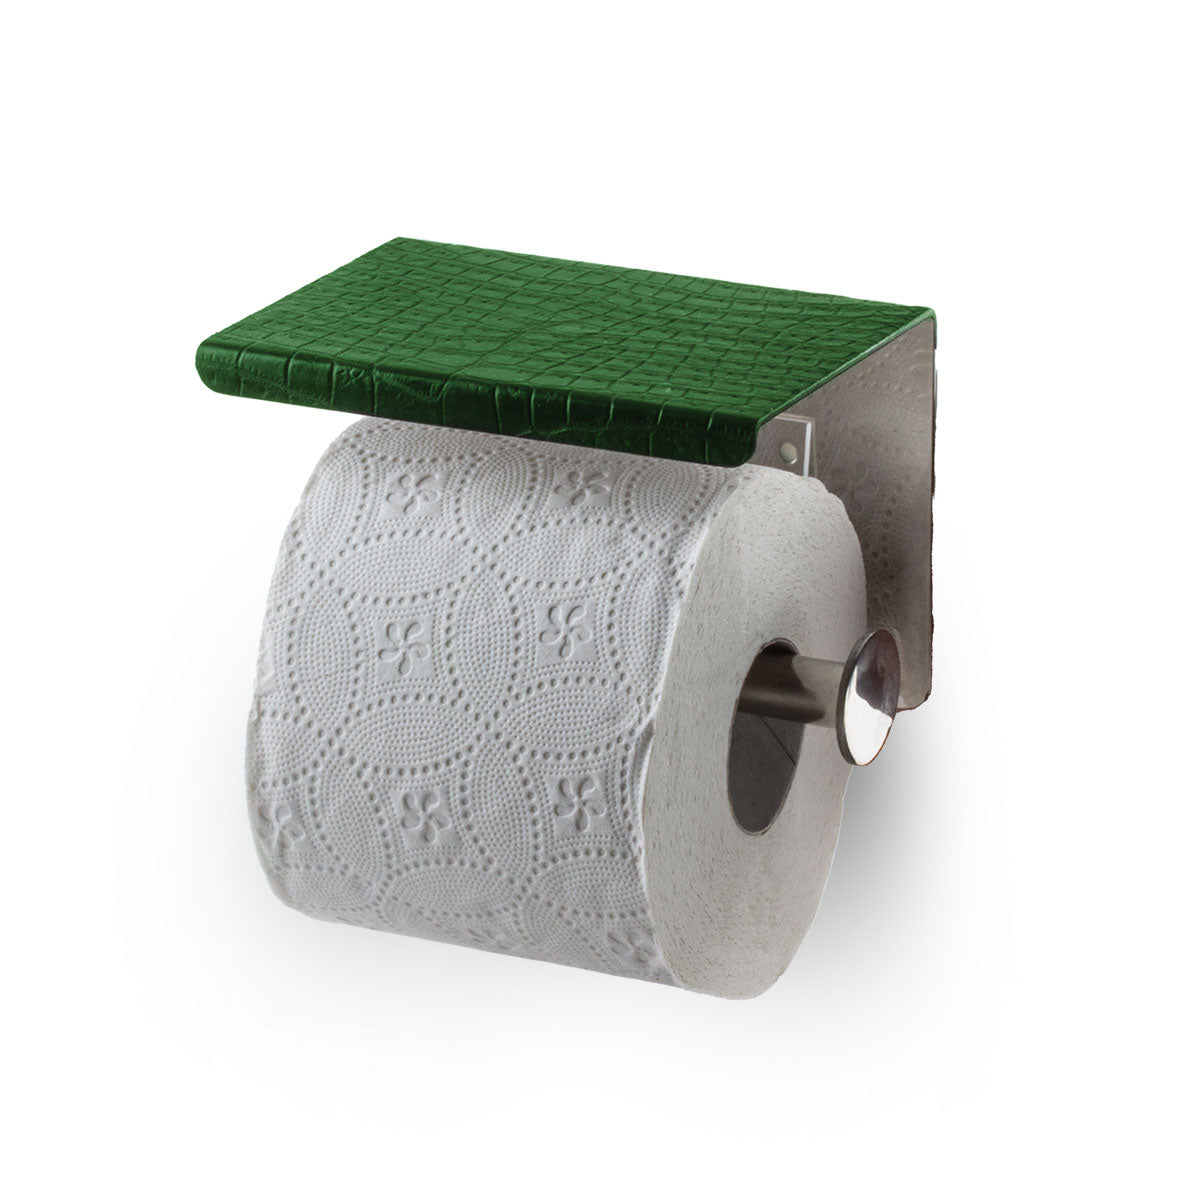 Leather toilet paper dispenser - Alligator